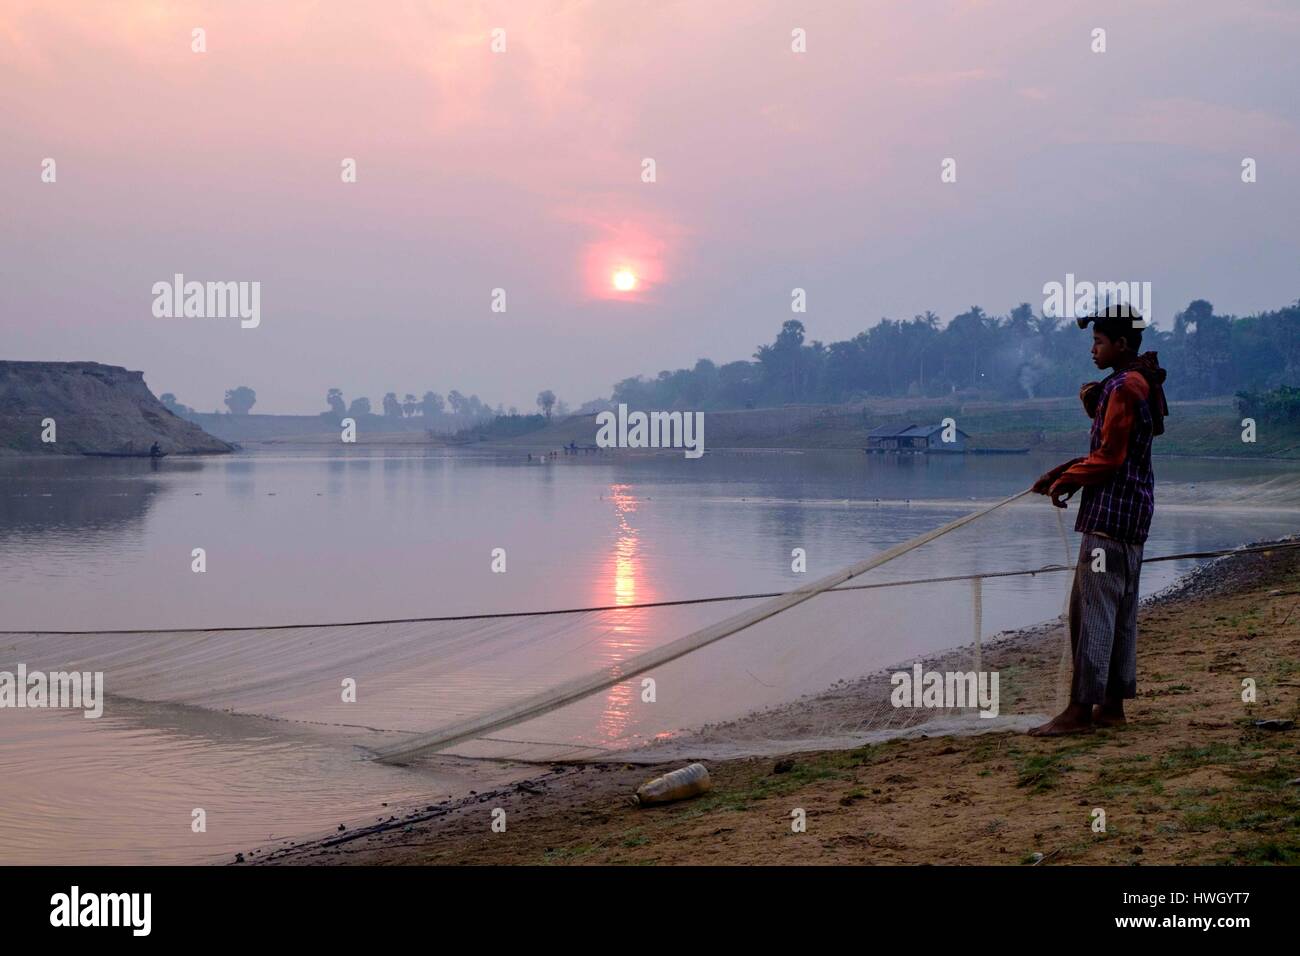 Kambodscha, Provinz Kompong Thom, Kompong Thom oder Kampong Thom, Fischer am Ufer des Flusses Stung Sen Stockfoto